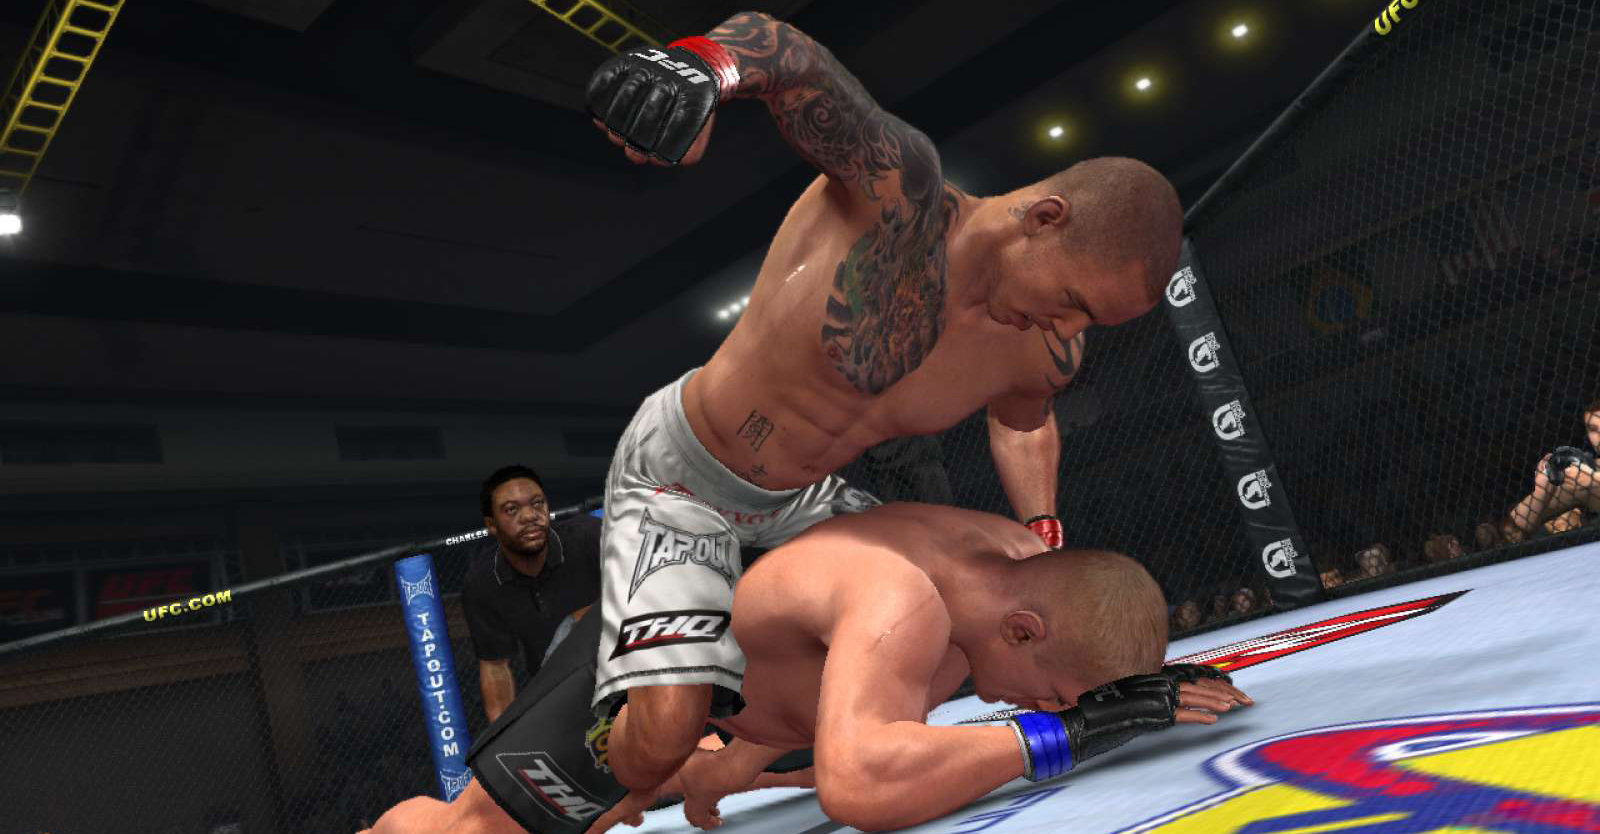 UFC Undisputed 3 vs UFC 2010 screenshots showing Punching